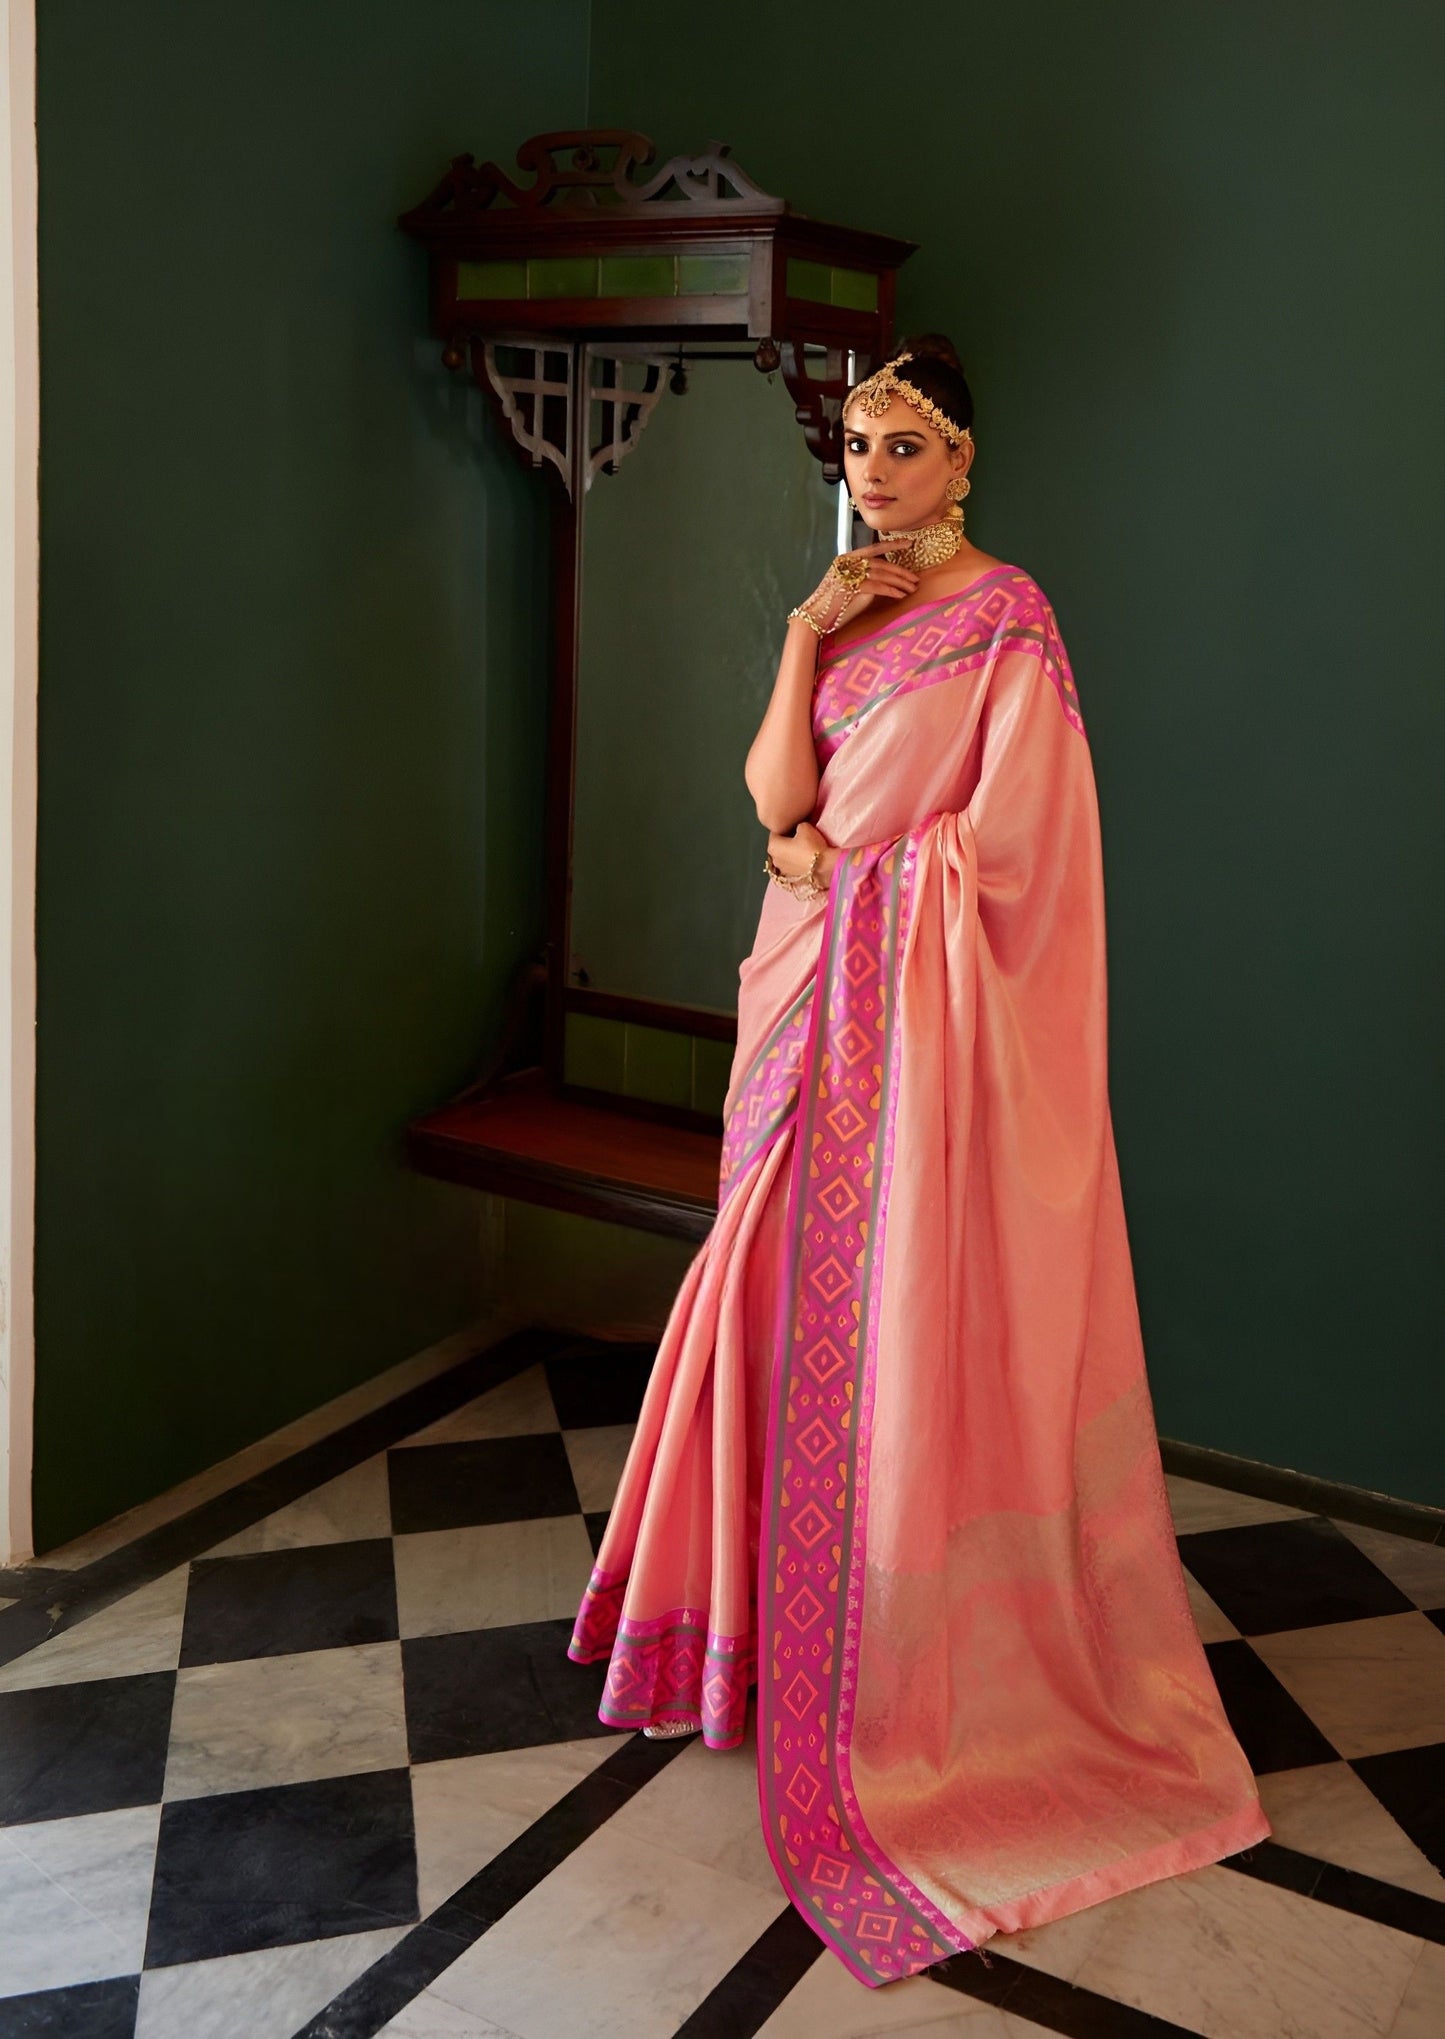 EKKTARA Saree For Women Navy Peach Colour Kanchivaram Silk Saree With Unstitched Blouse